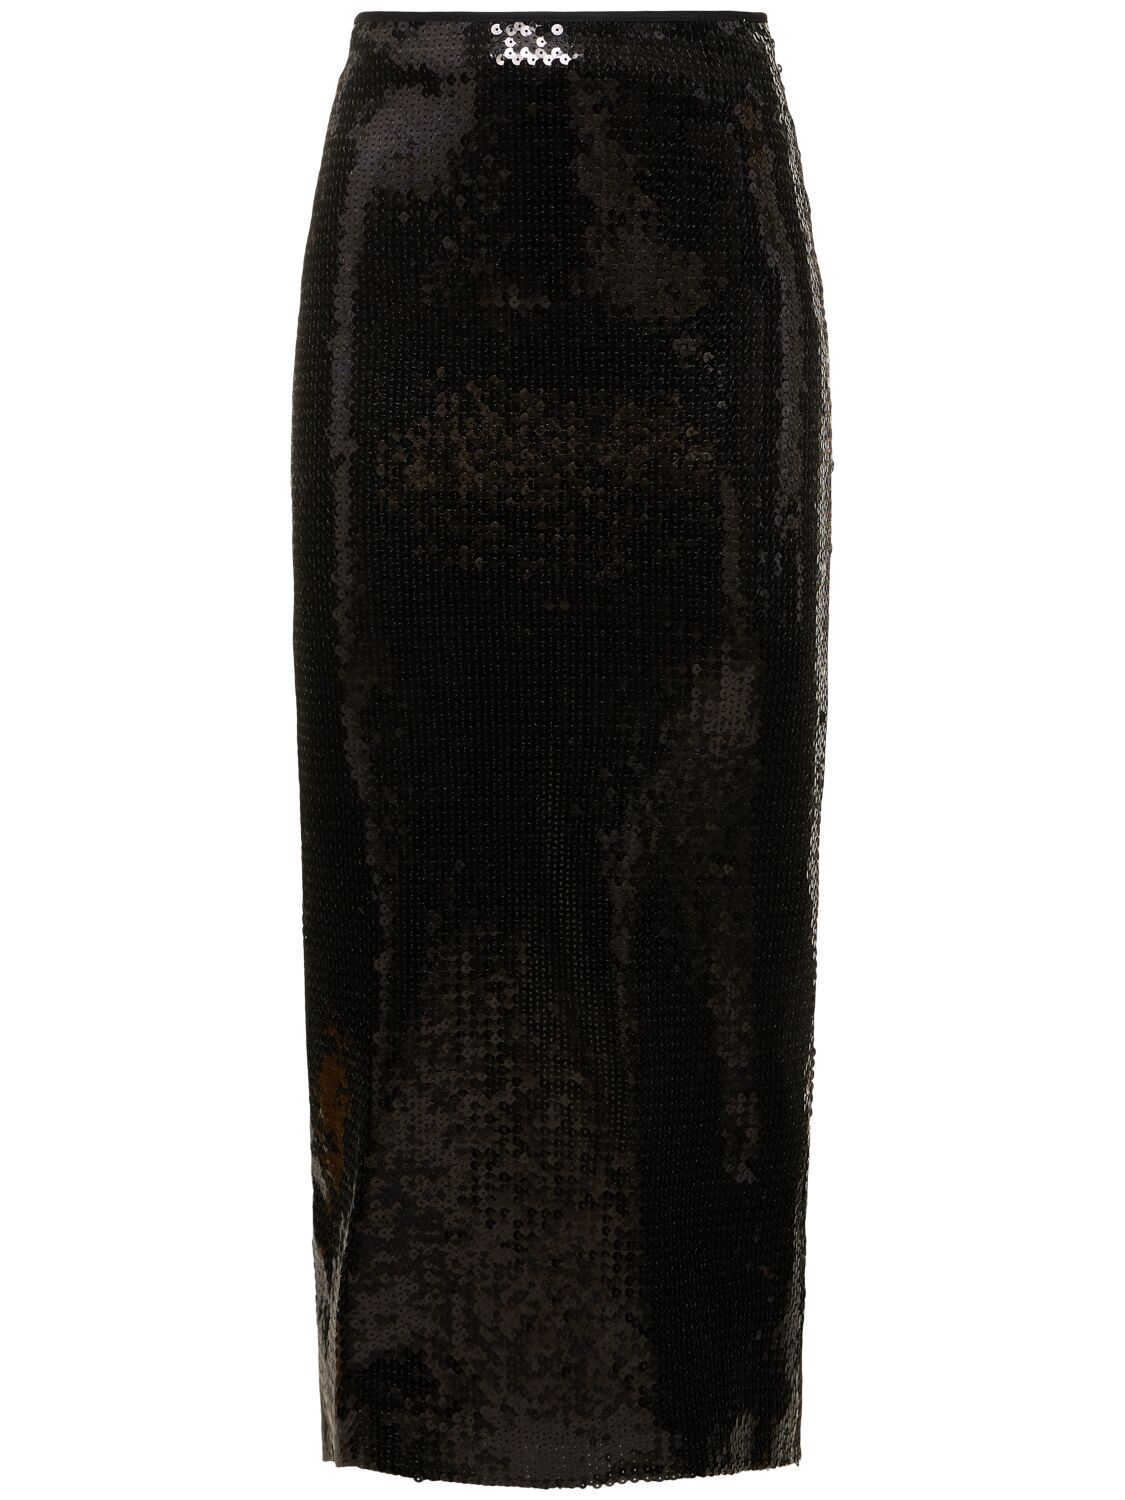 David Koma Metallic Sequined Pencil Midi Skirt In Black